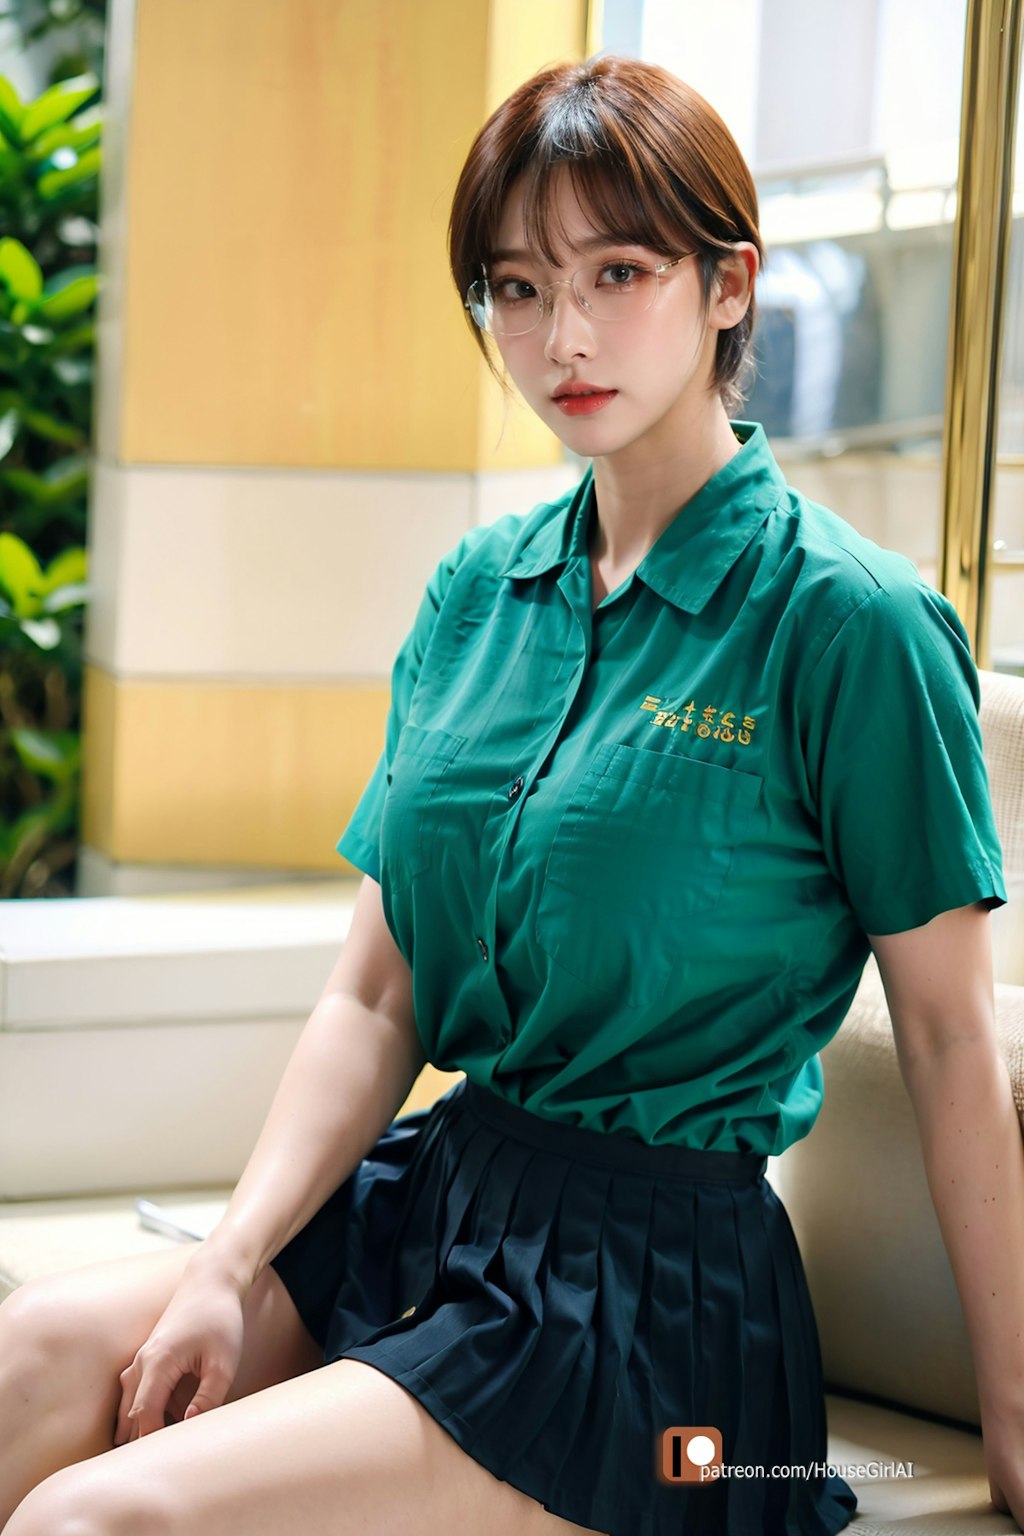 AI Girl Vol 565 | Taiwan uniform